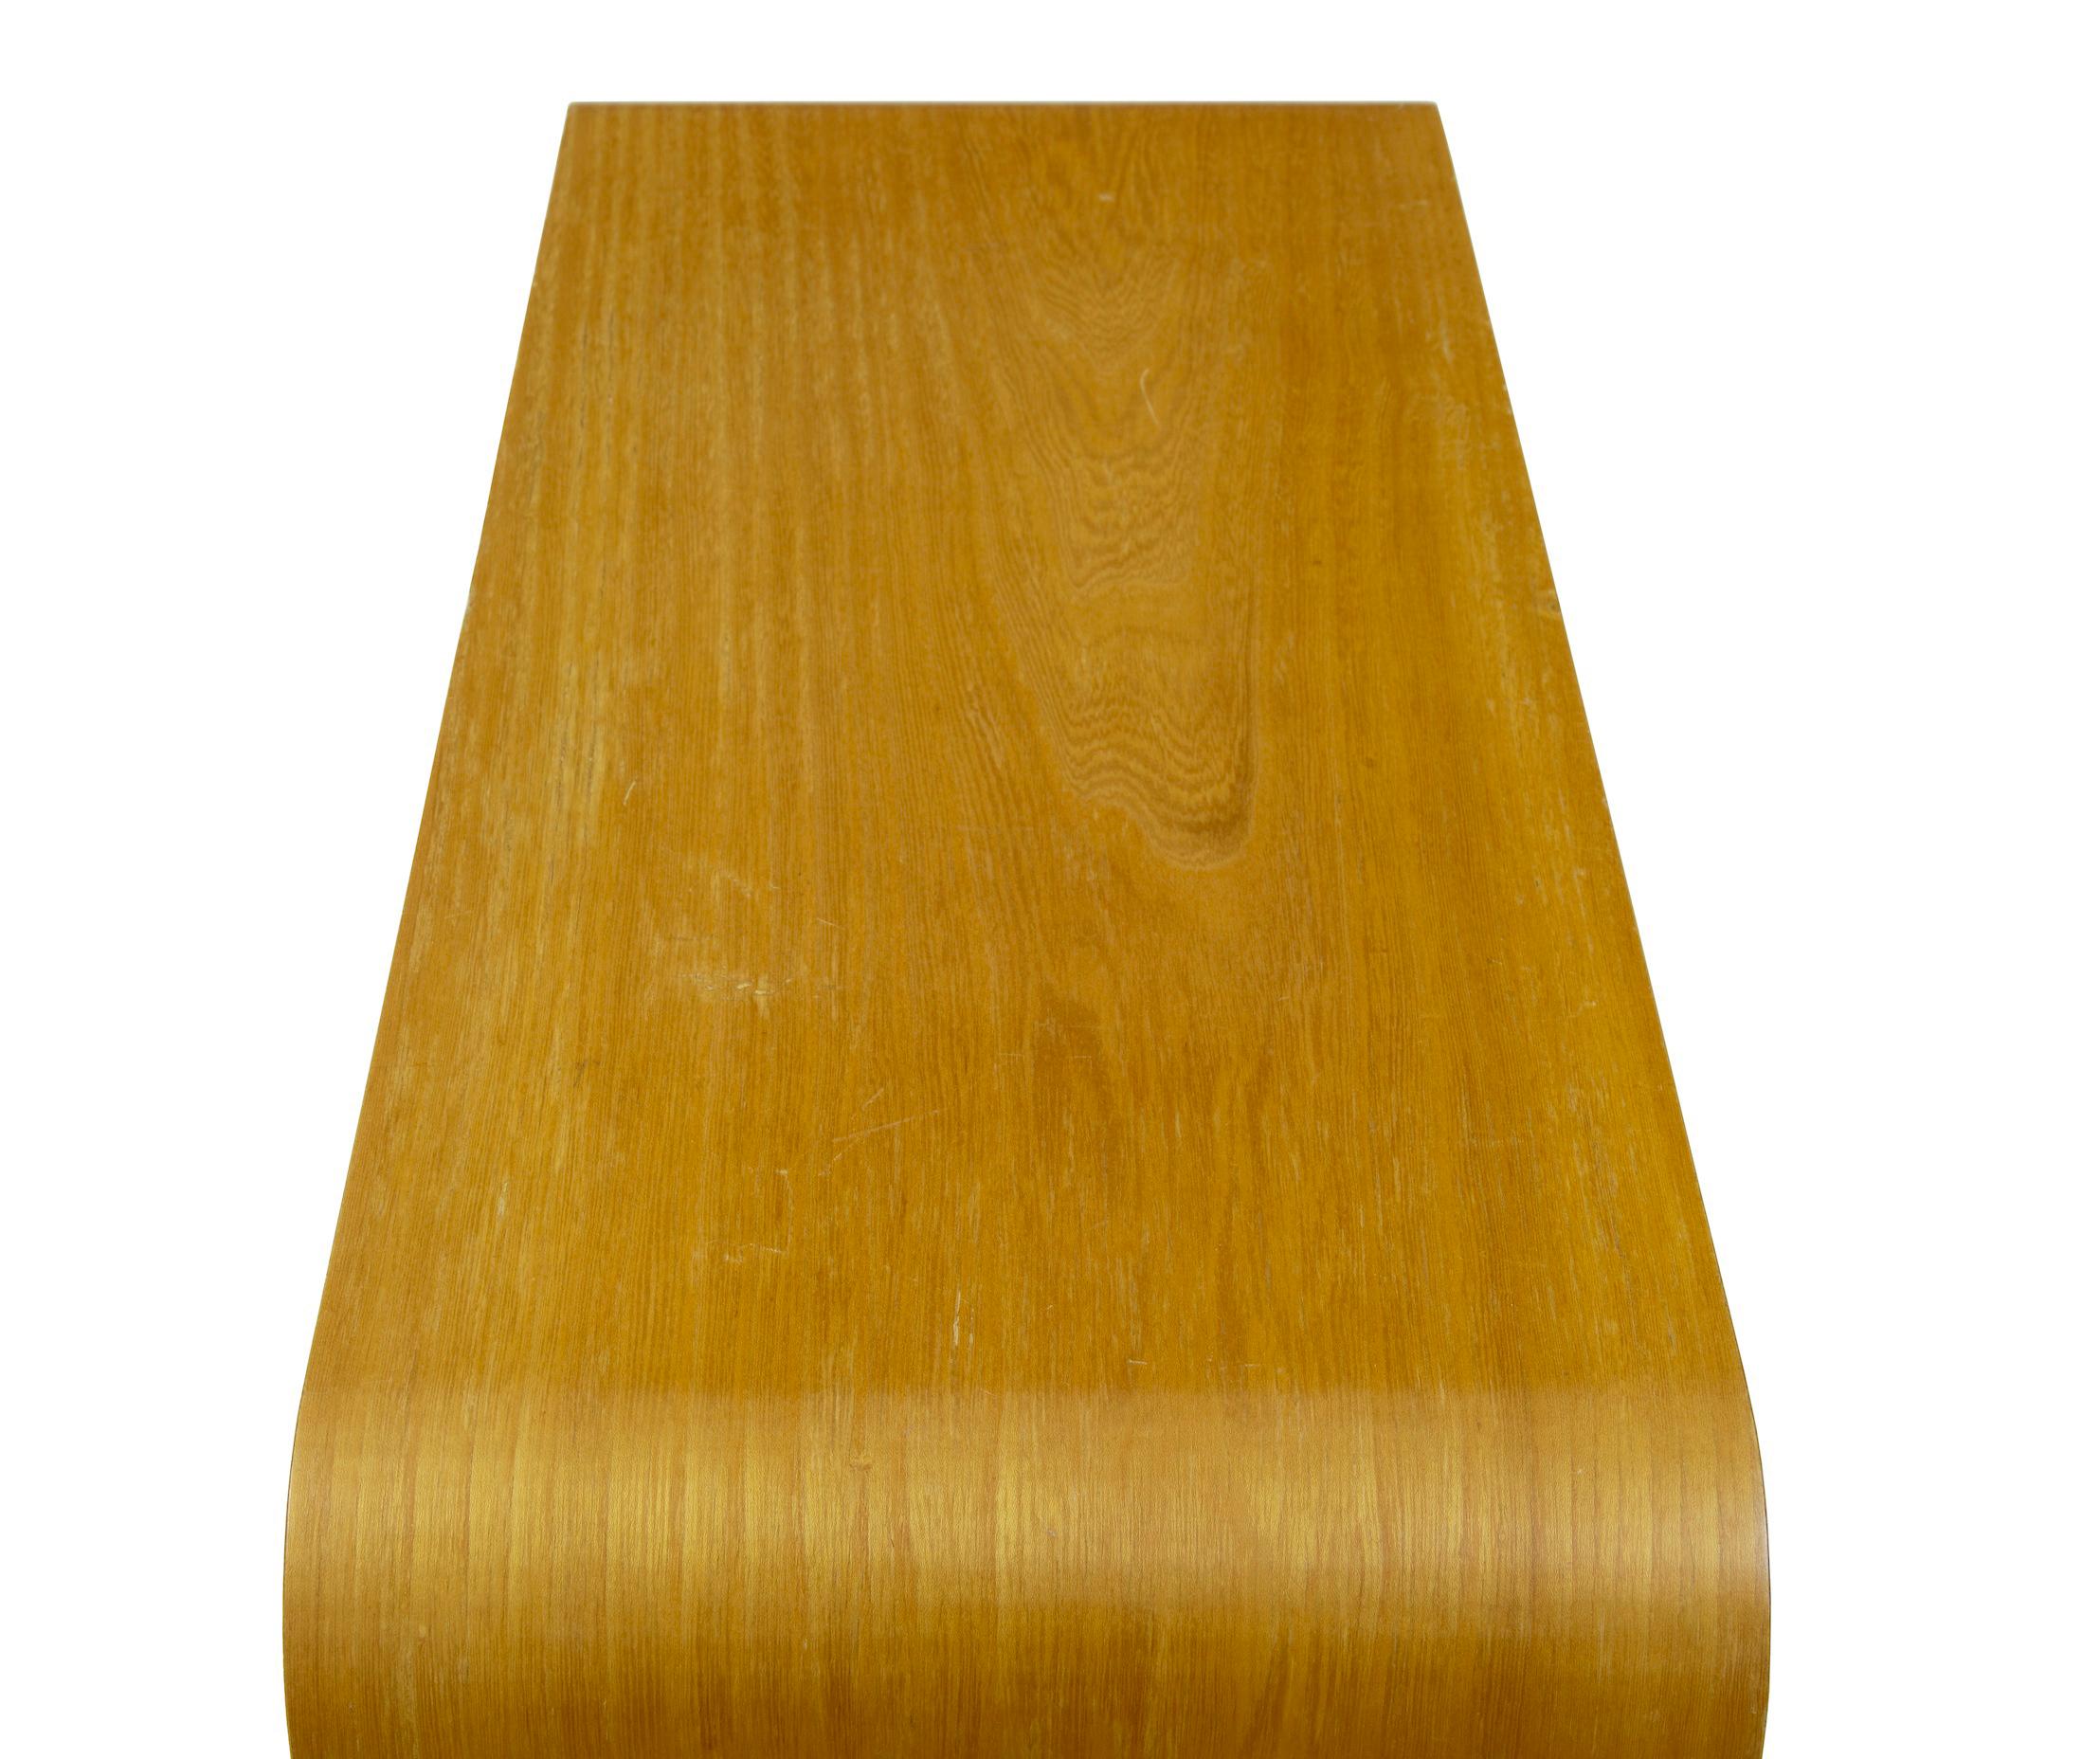 Scandinavian Modern Mid-20th Century Scandinavian Shaped Birch Bedside Table